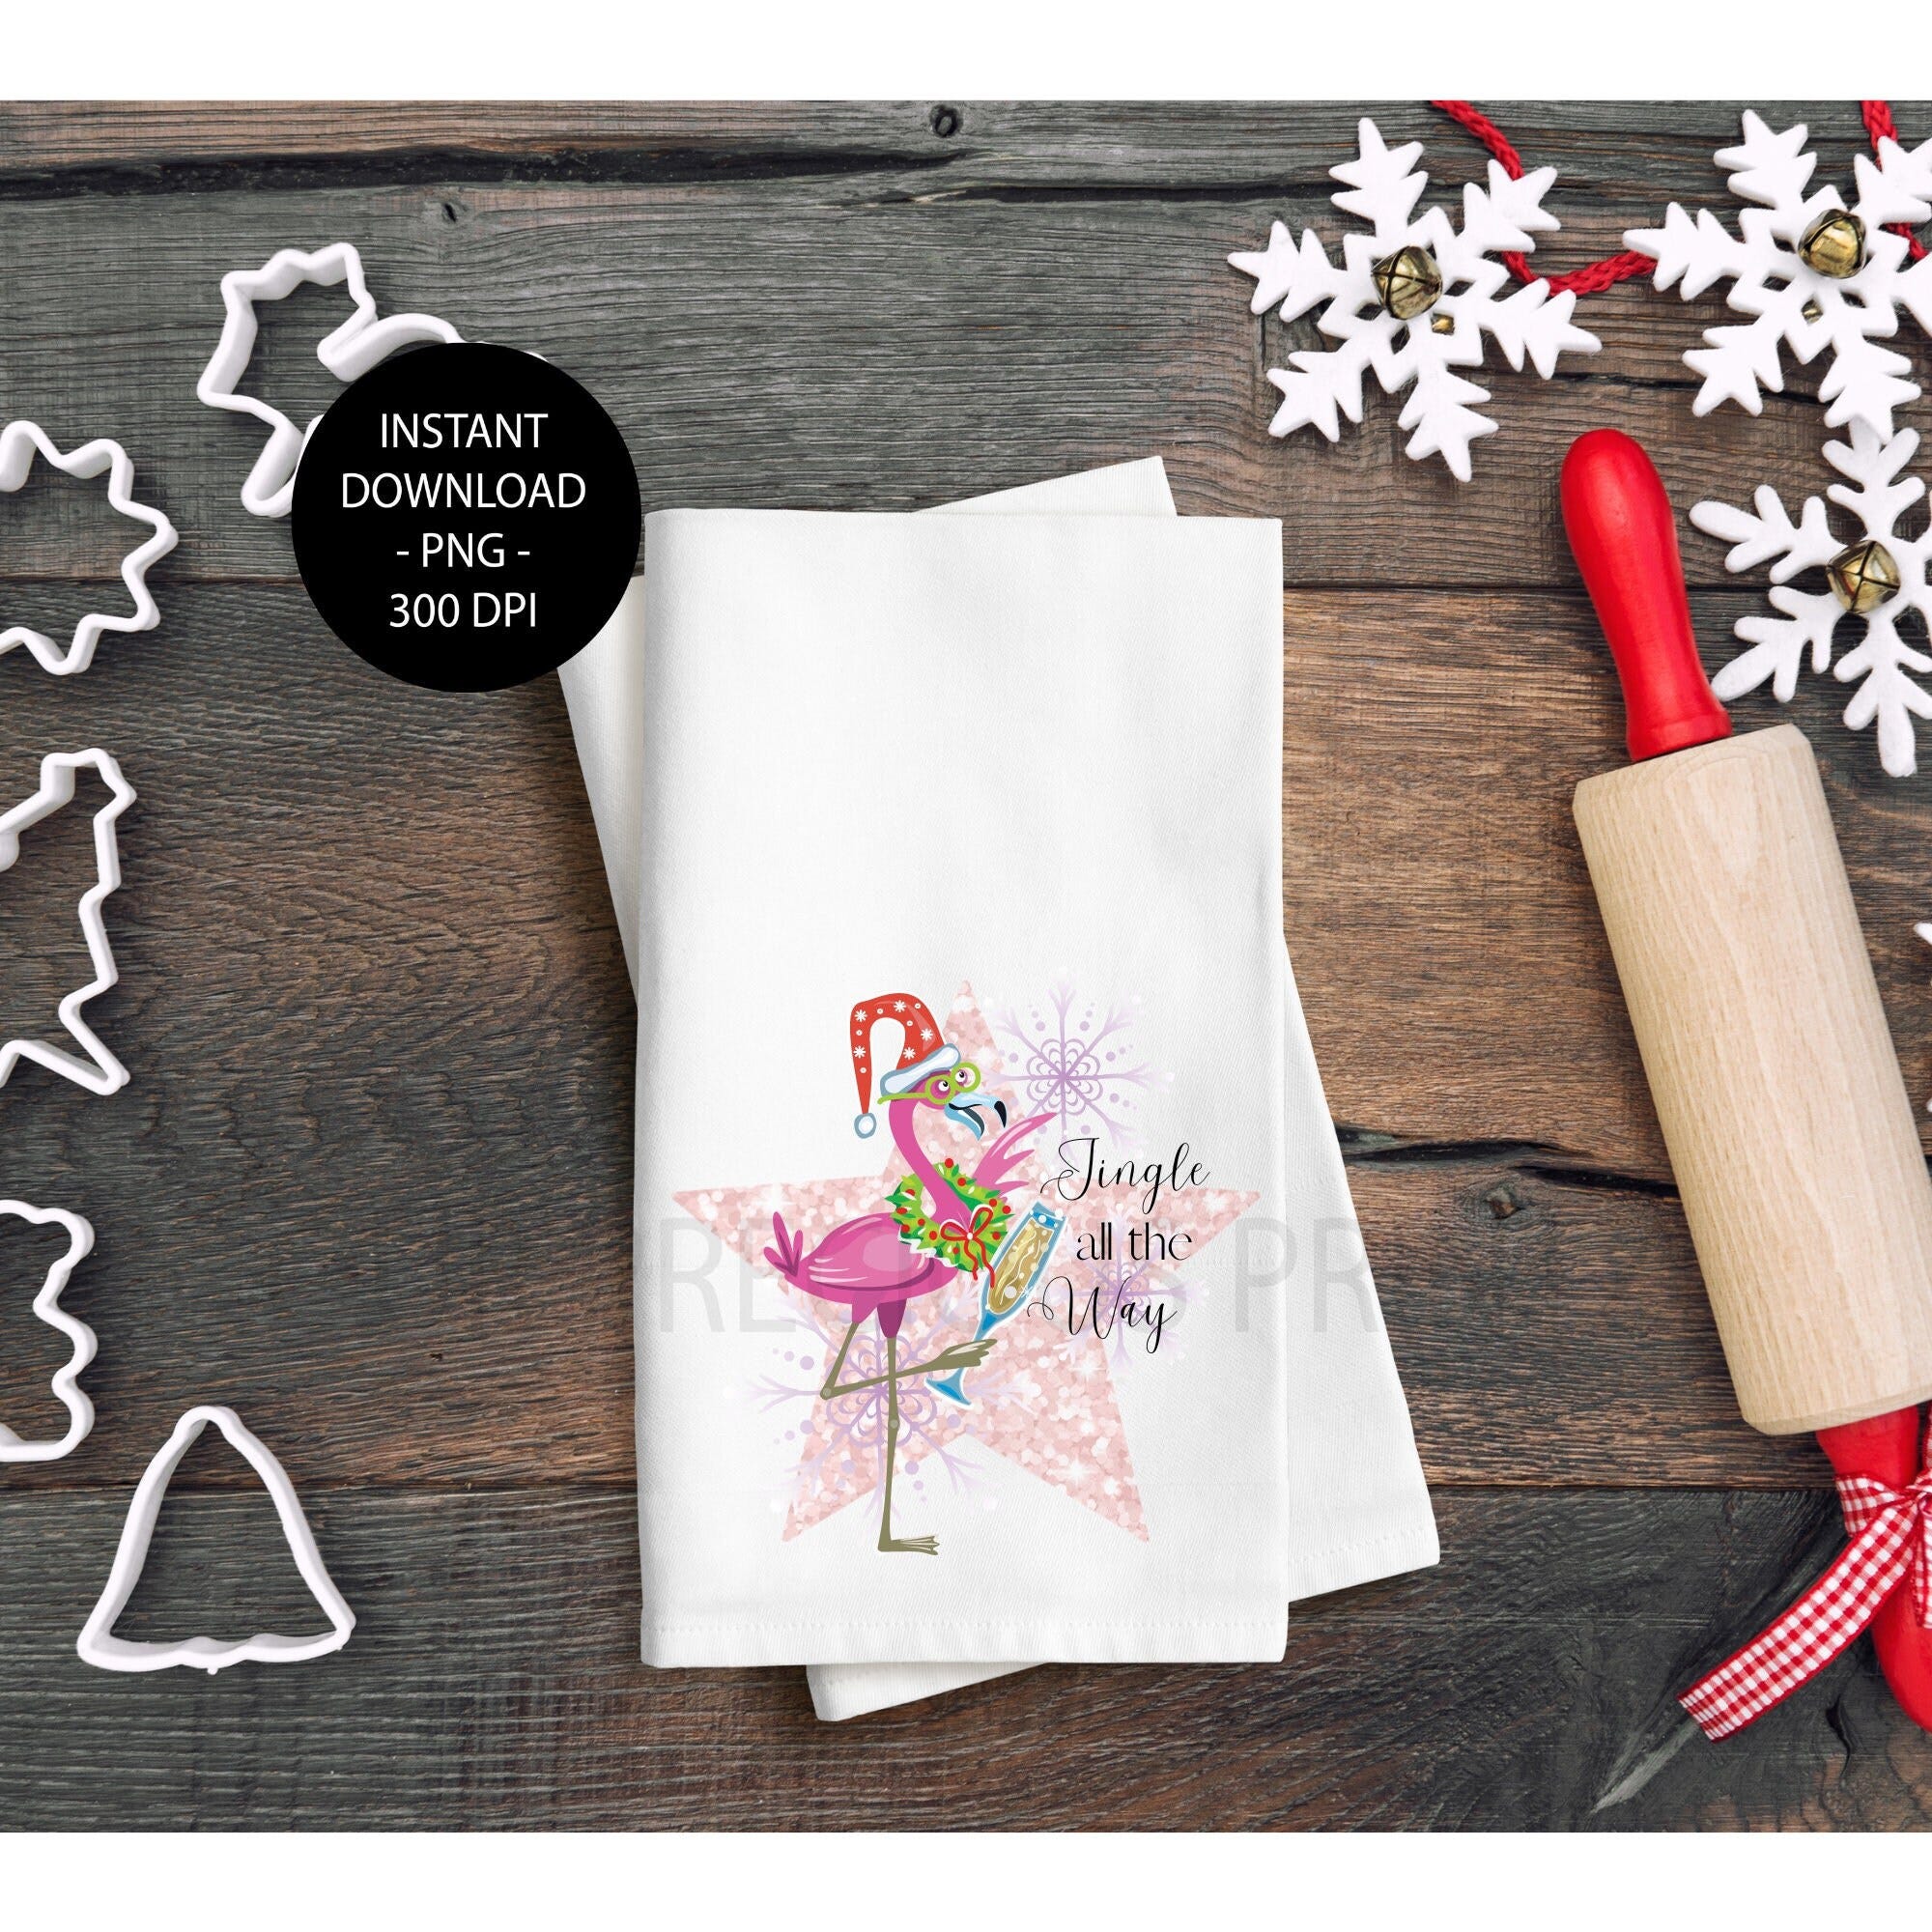 Funny Christmas Flamingo Champagne Scene PNG, Flour Sack Towel Clip Art, Christmas Flamingo Scene , Sublimation, Instant Digital Download